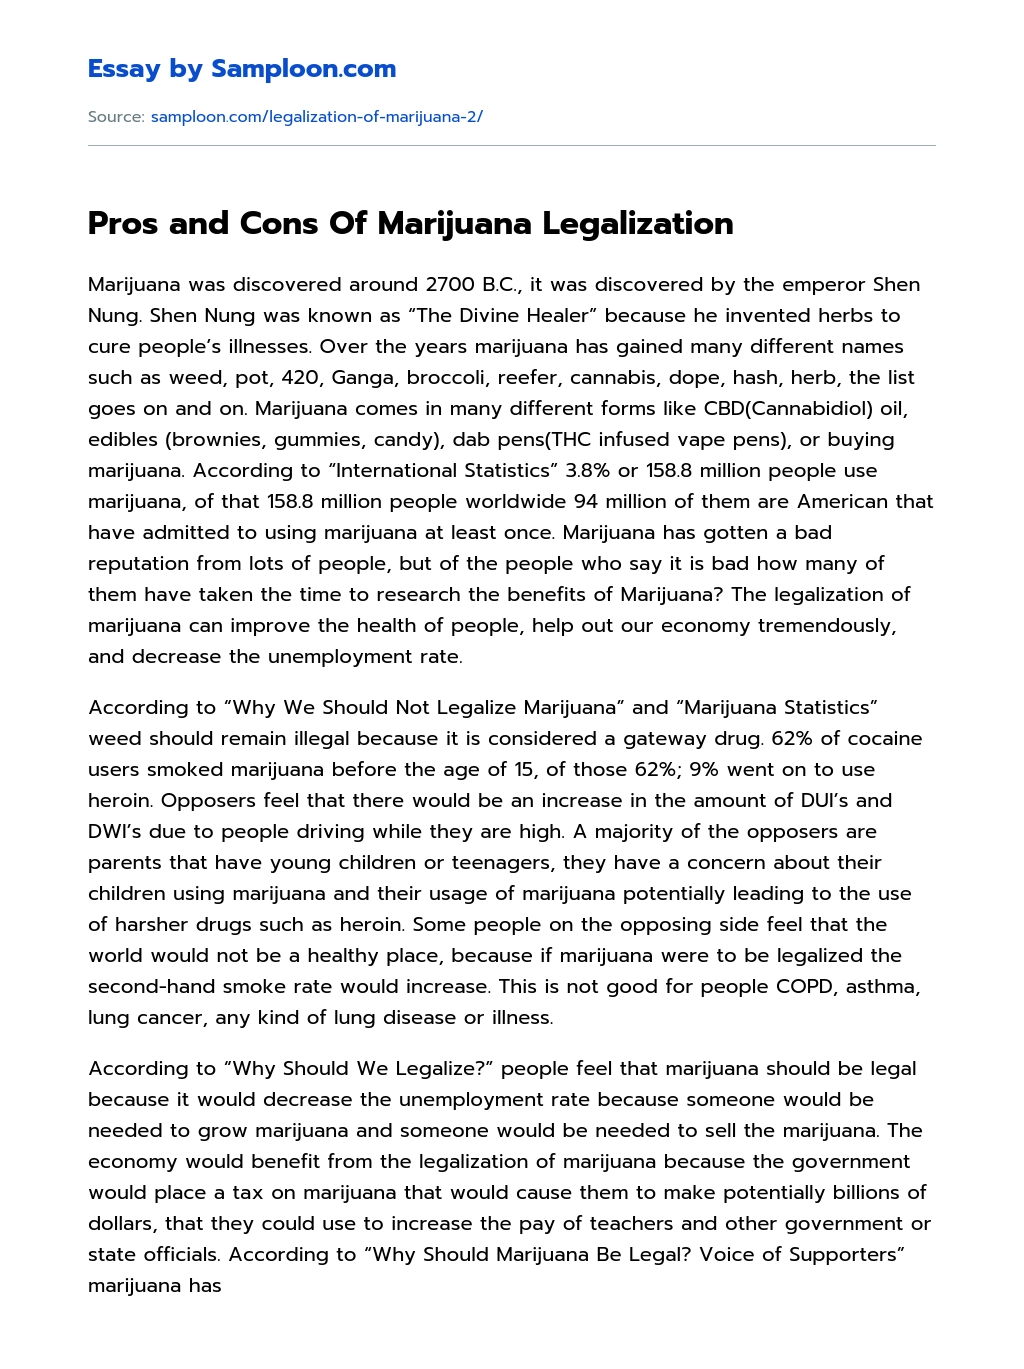 Pros and Cons Of Marijuana Legalization essay